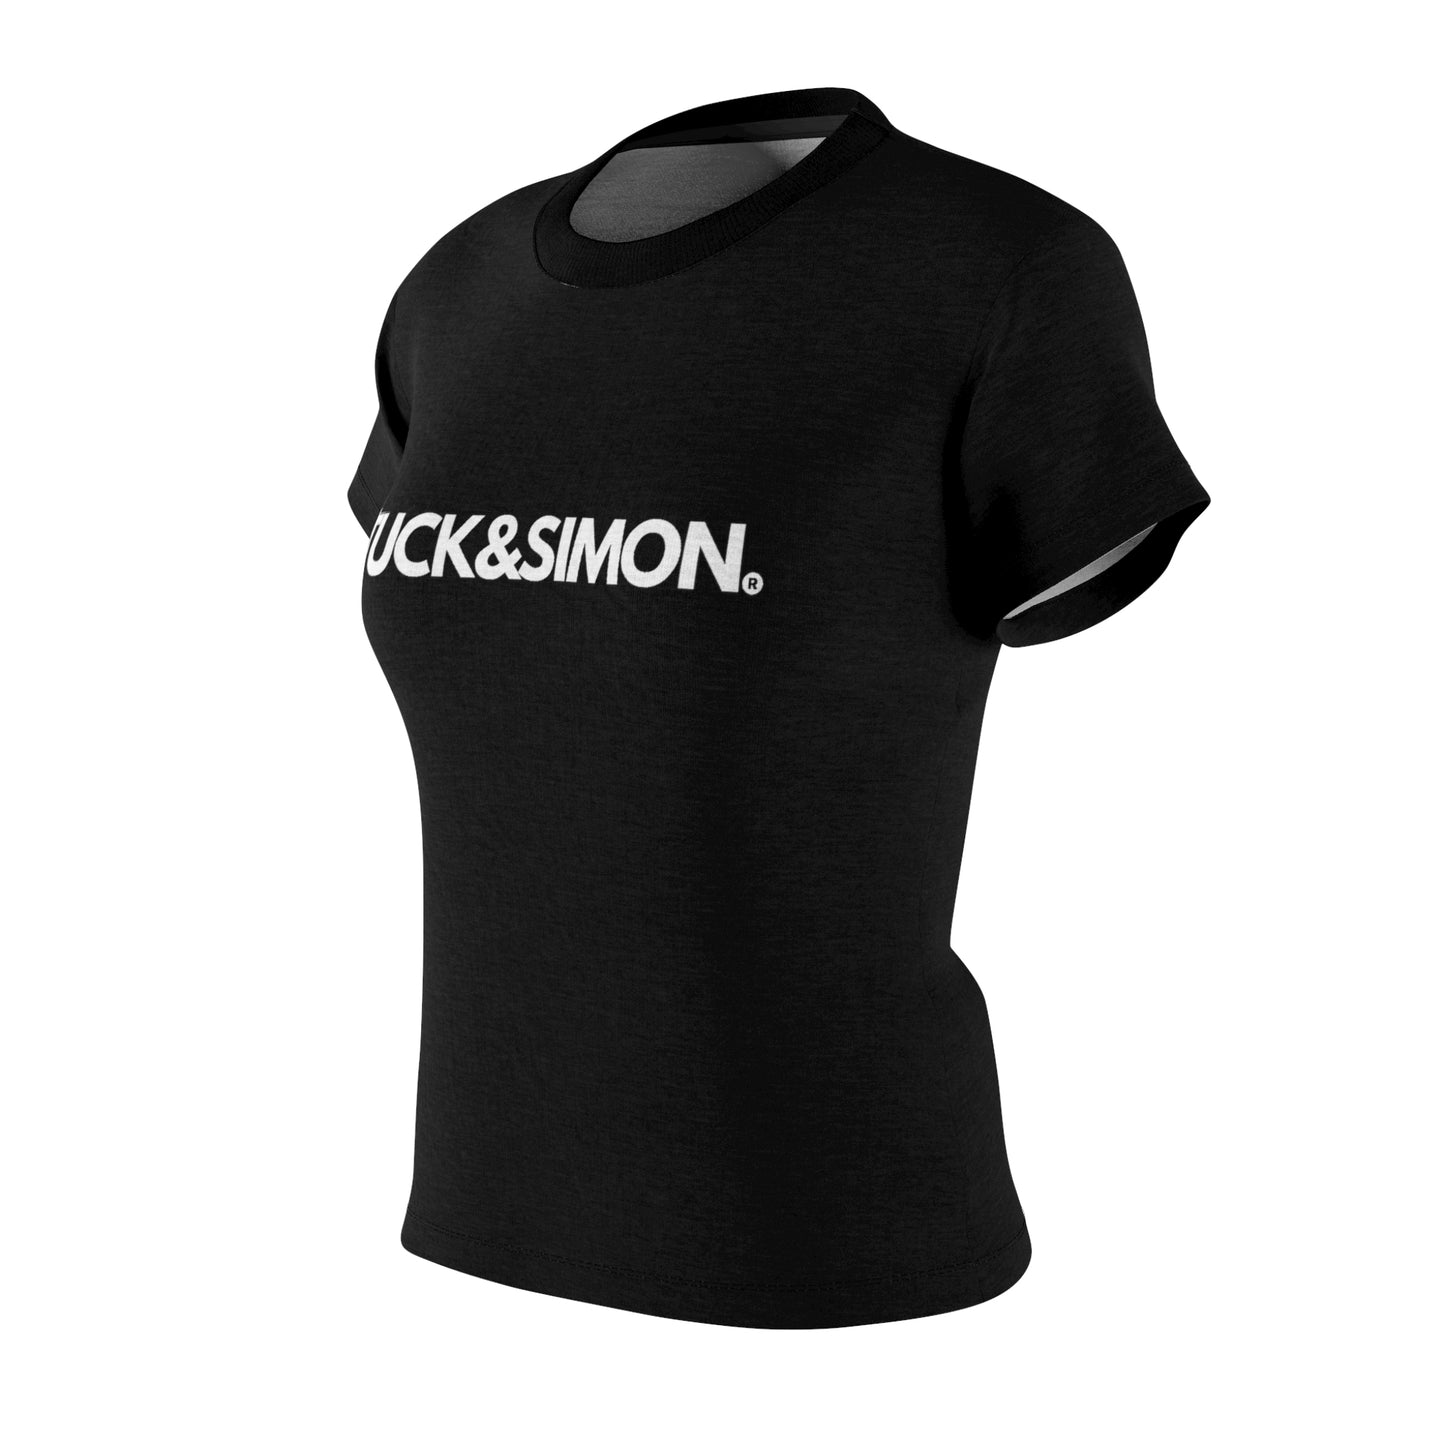 Teen Tuck&Simon Black Fitted T-Shirt